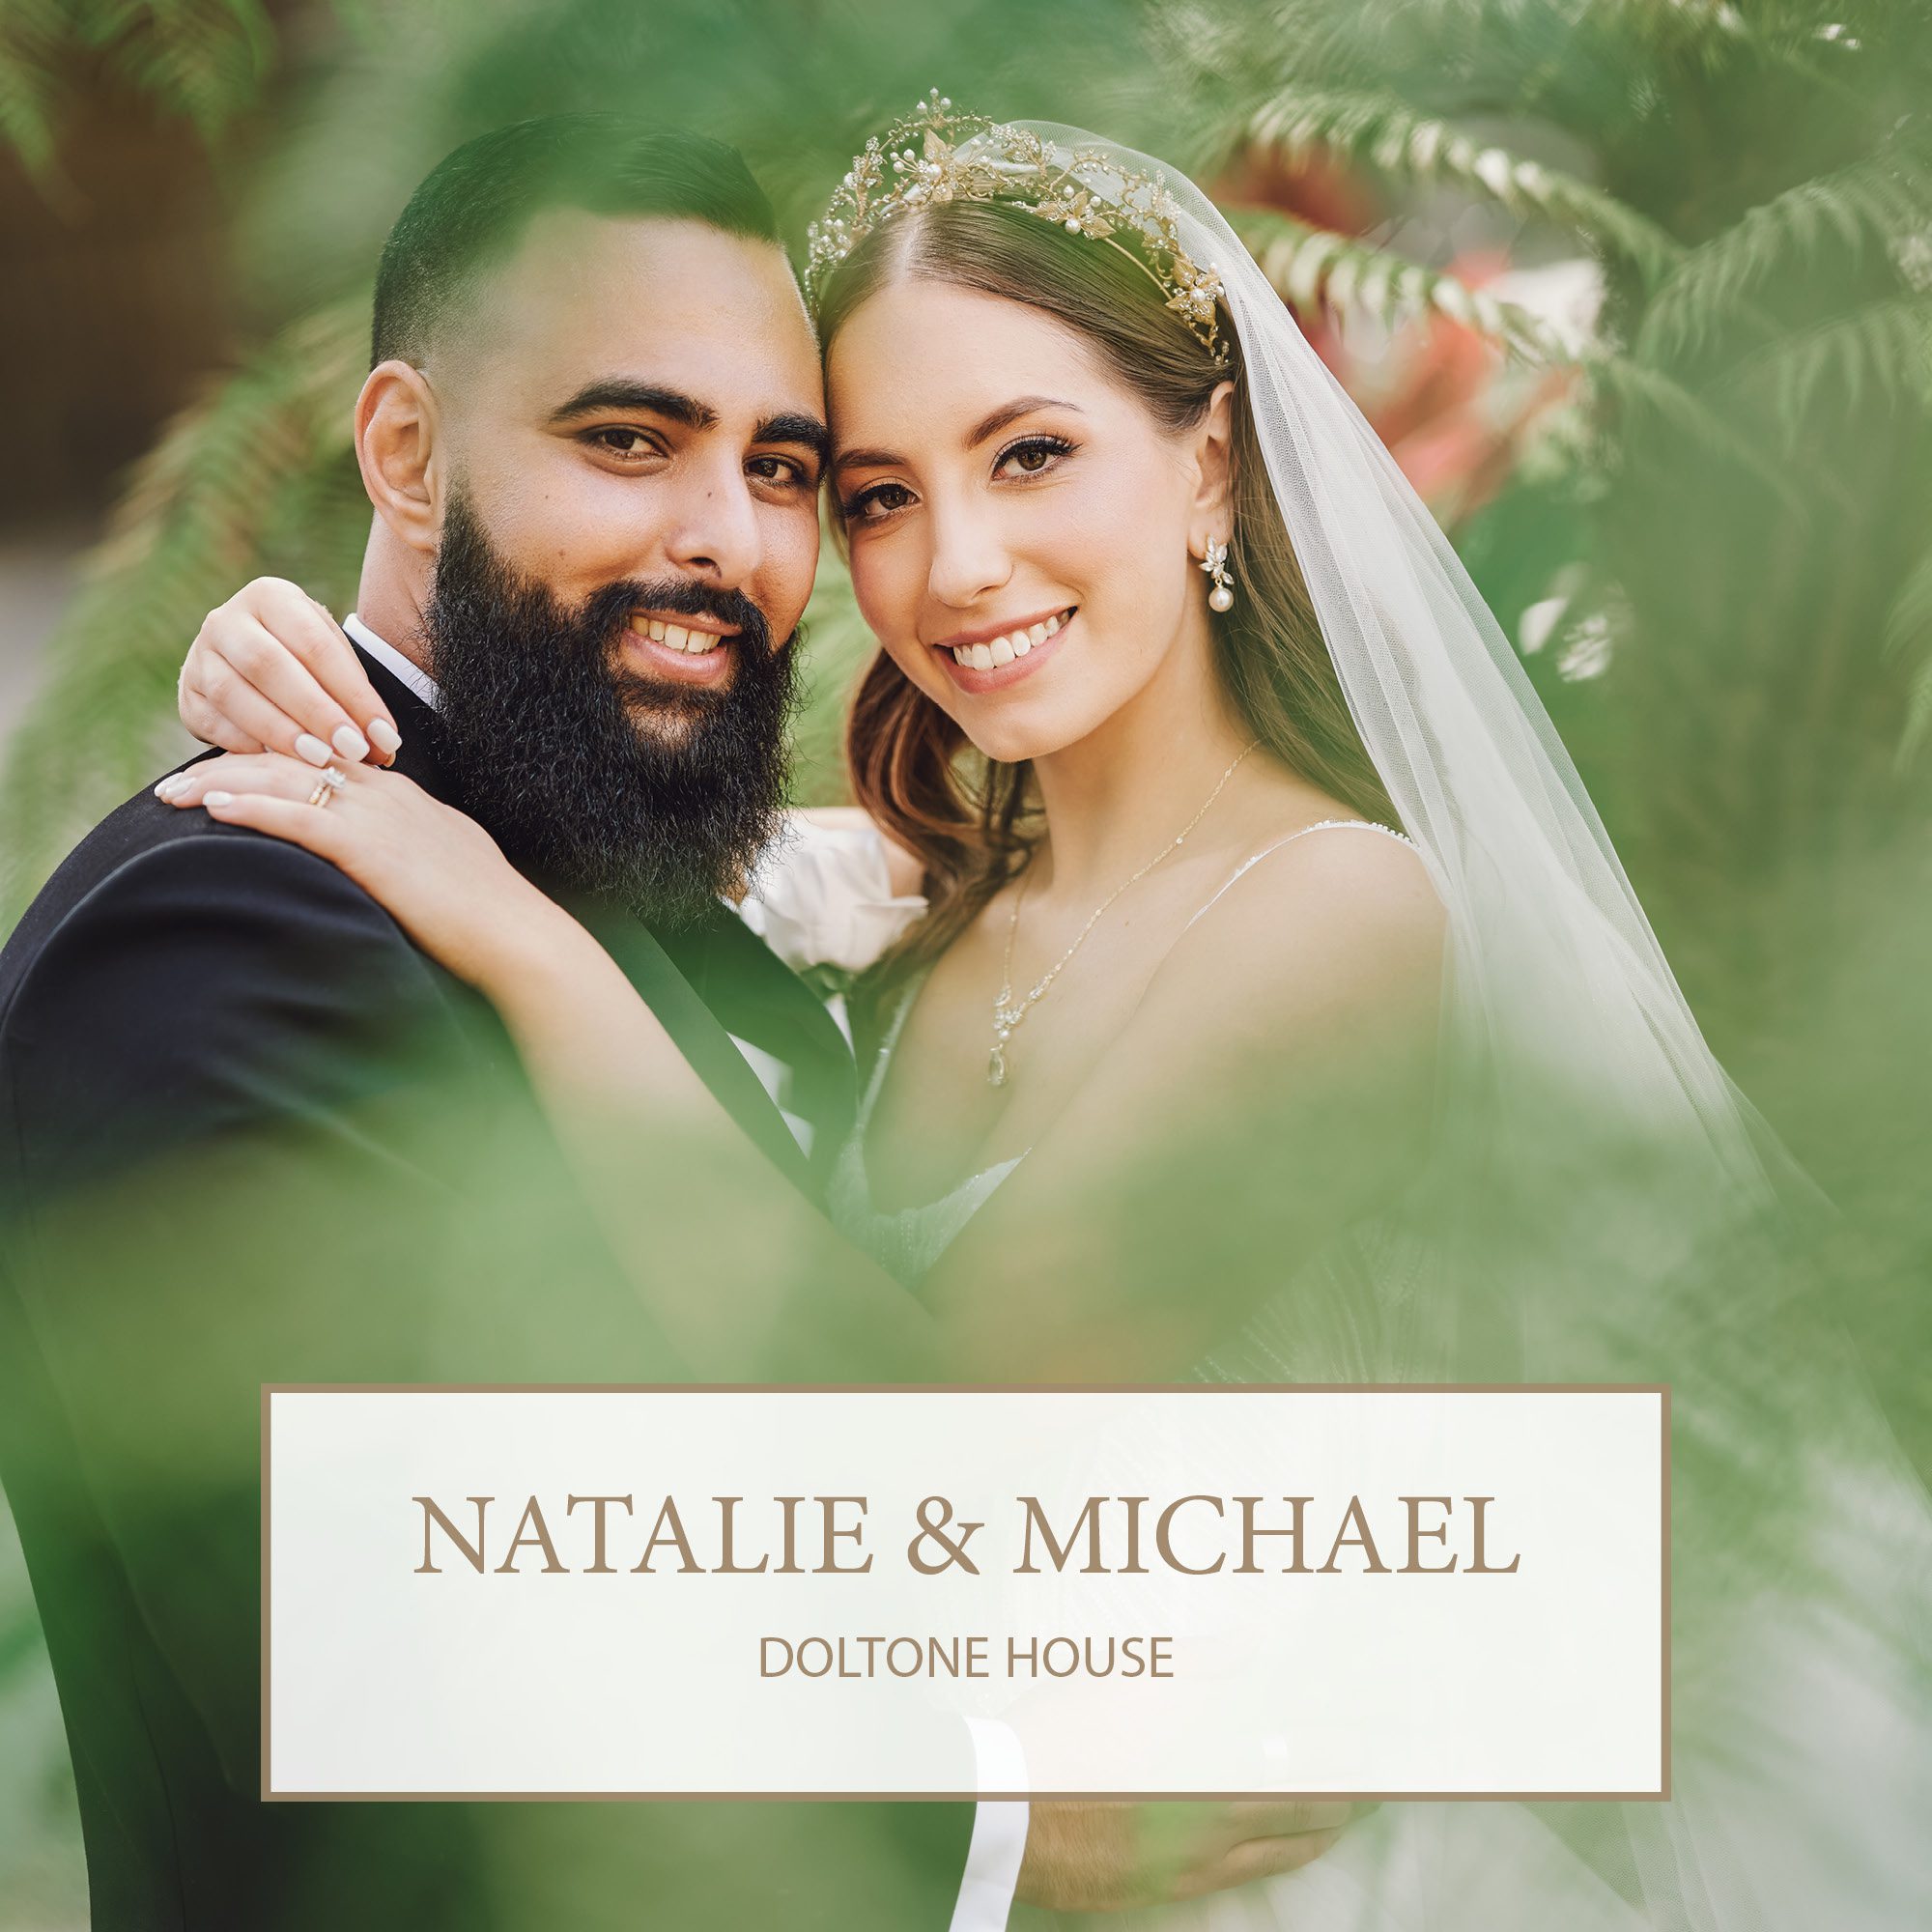 Doltone House Wedding: Natalie & Michael 1